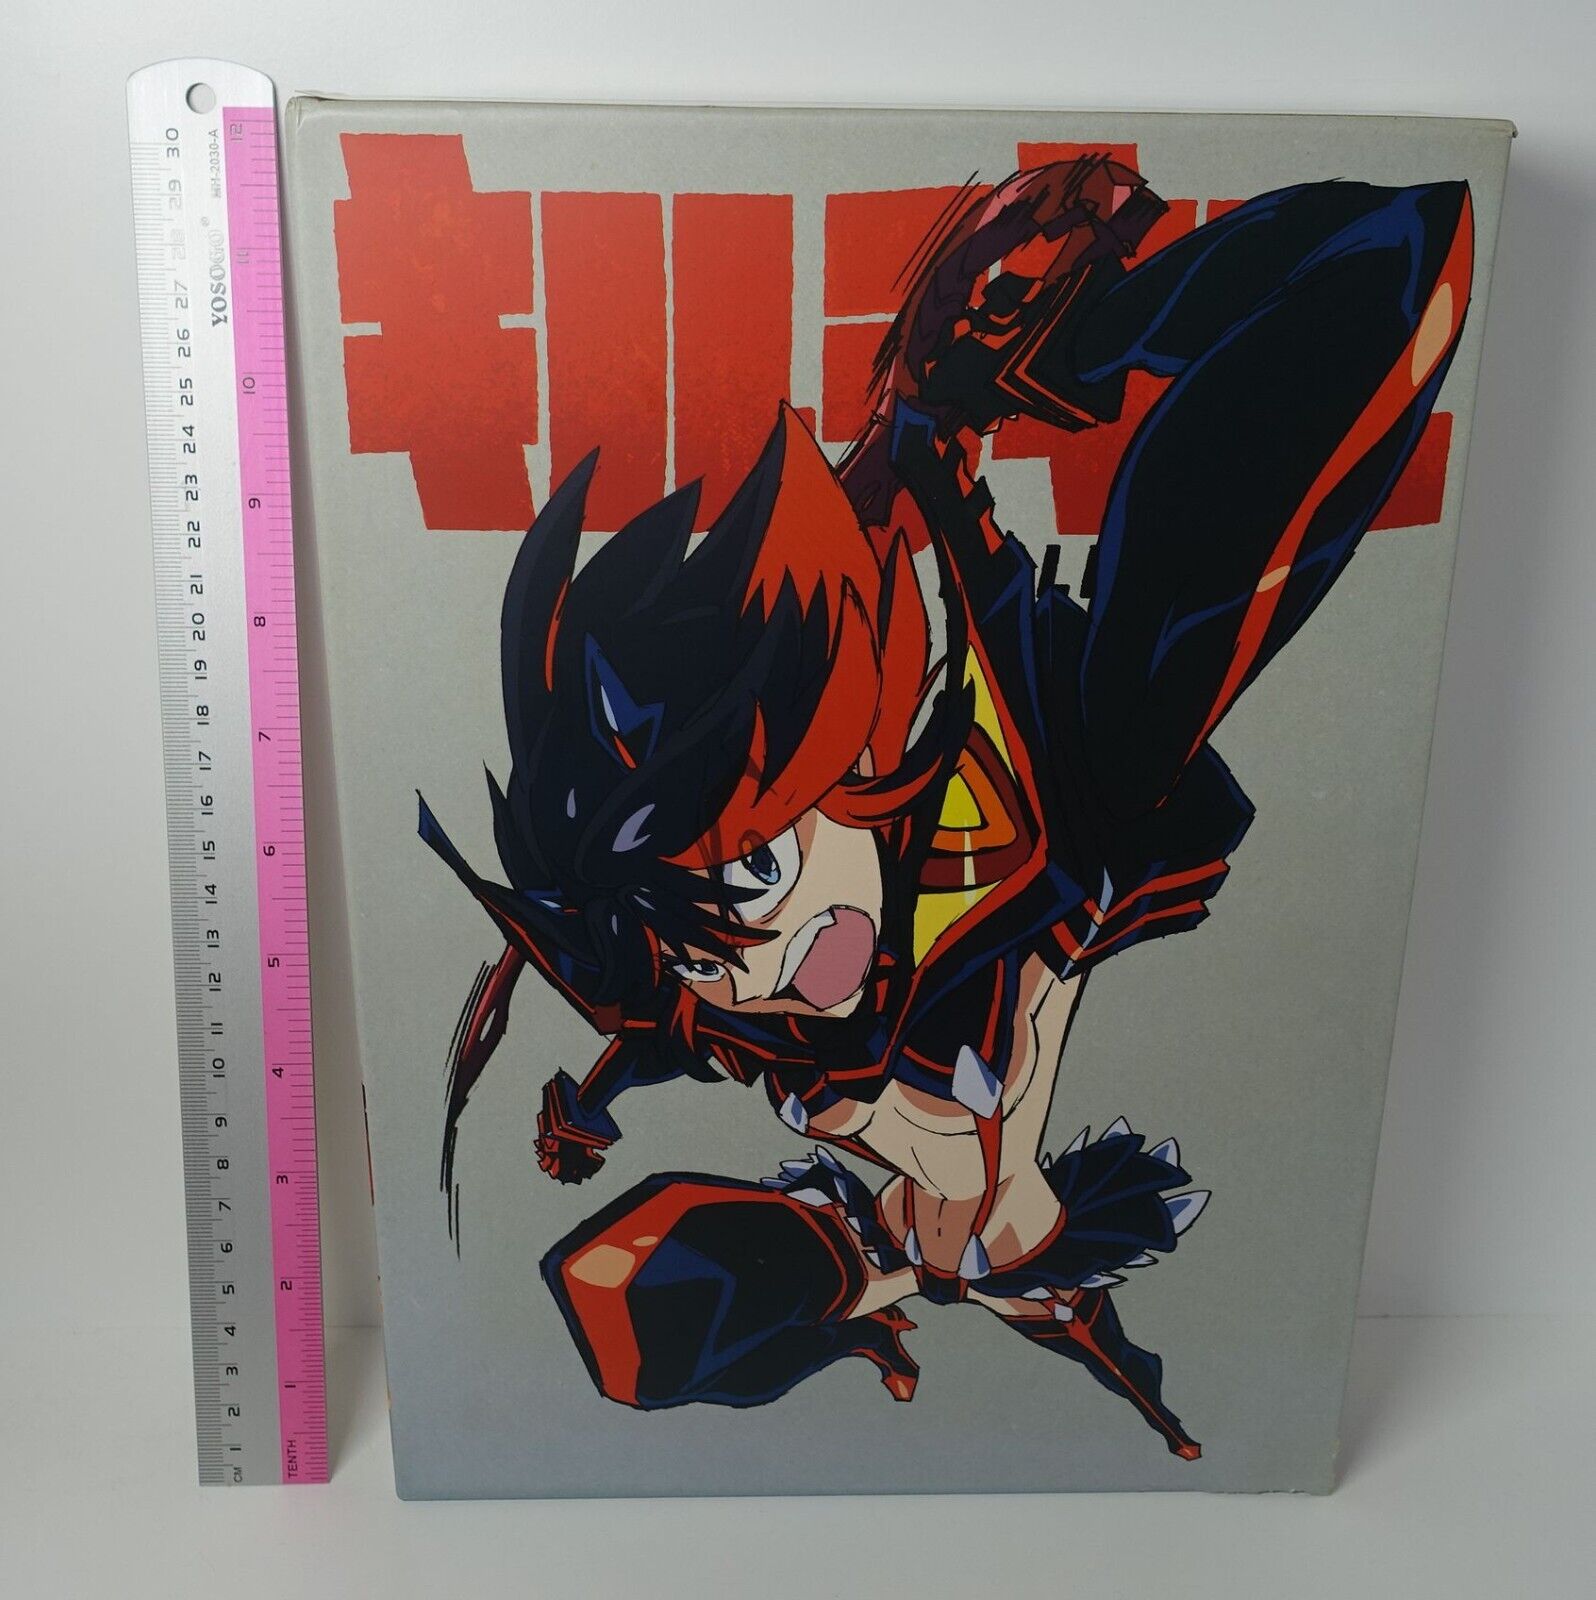 Kill La Kill Ryuko Hardcover Spiral Anime Notebook